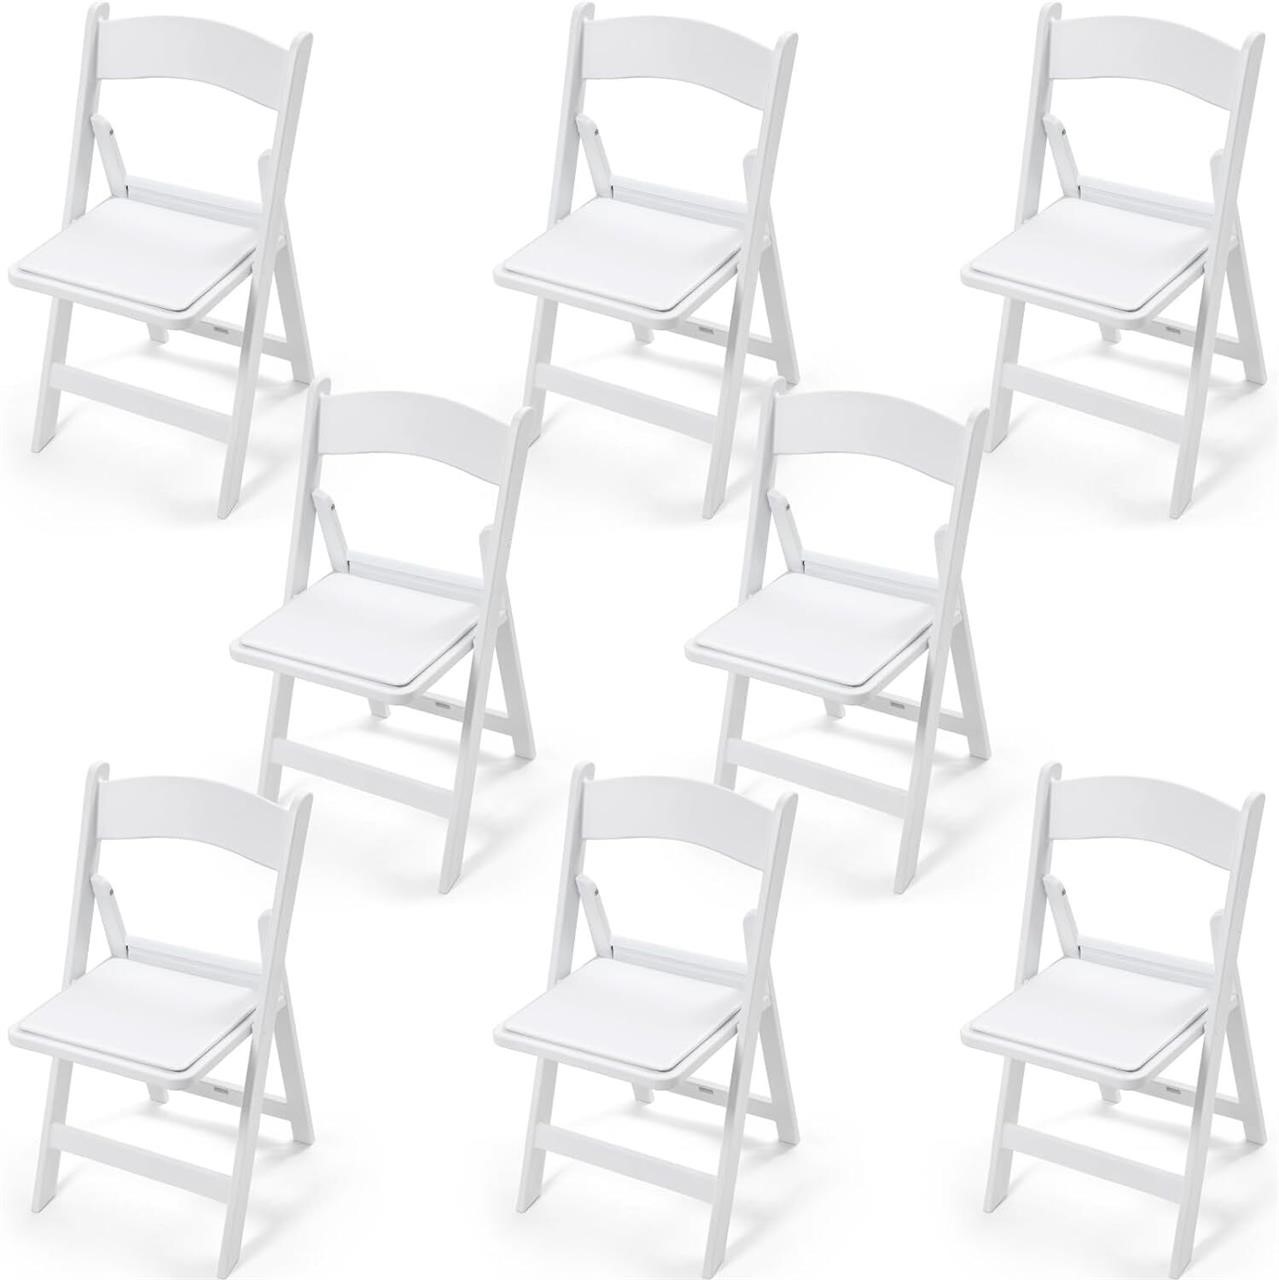 8 Pack Folding Chairs  PVC Padded Seats  White